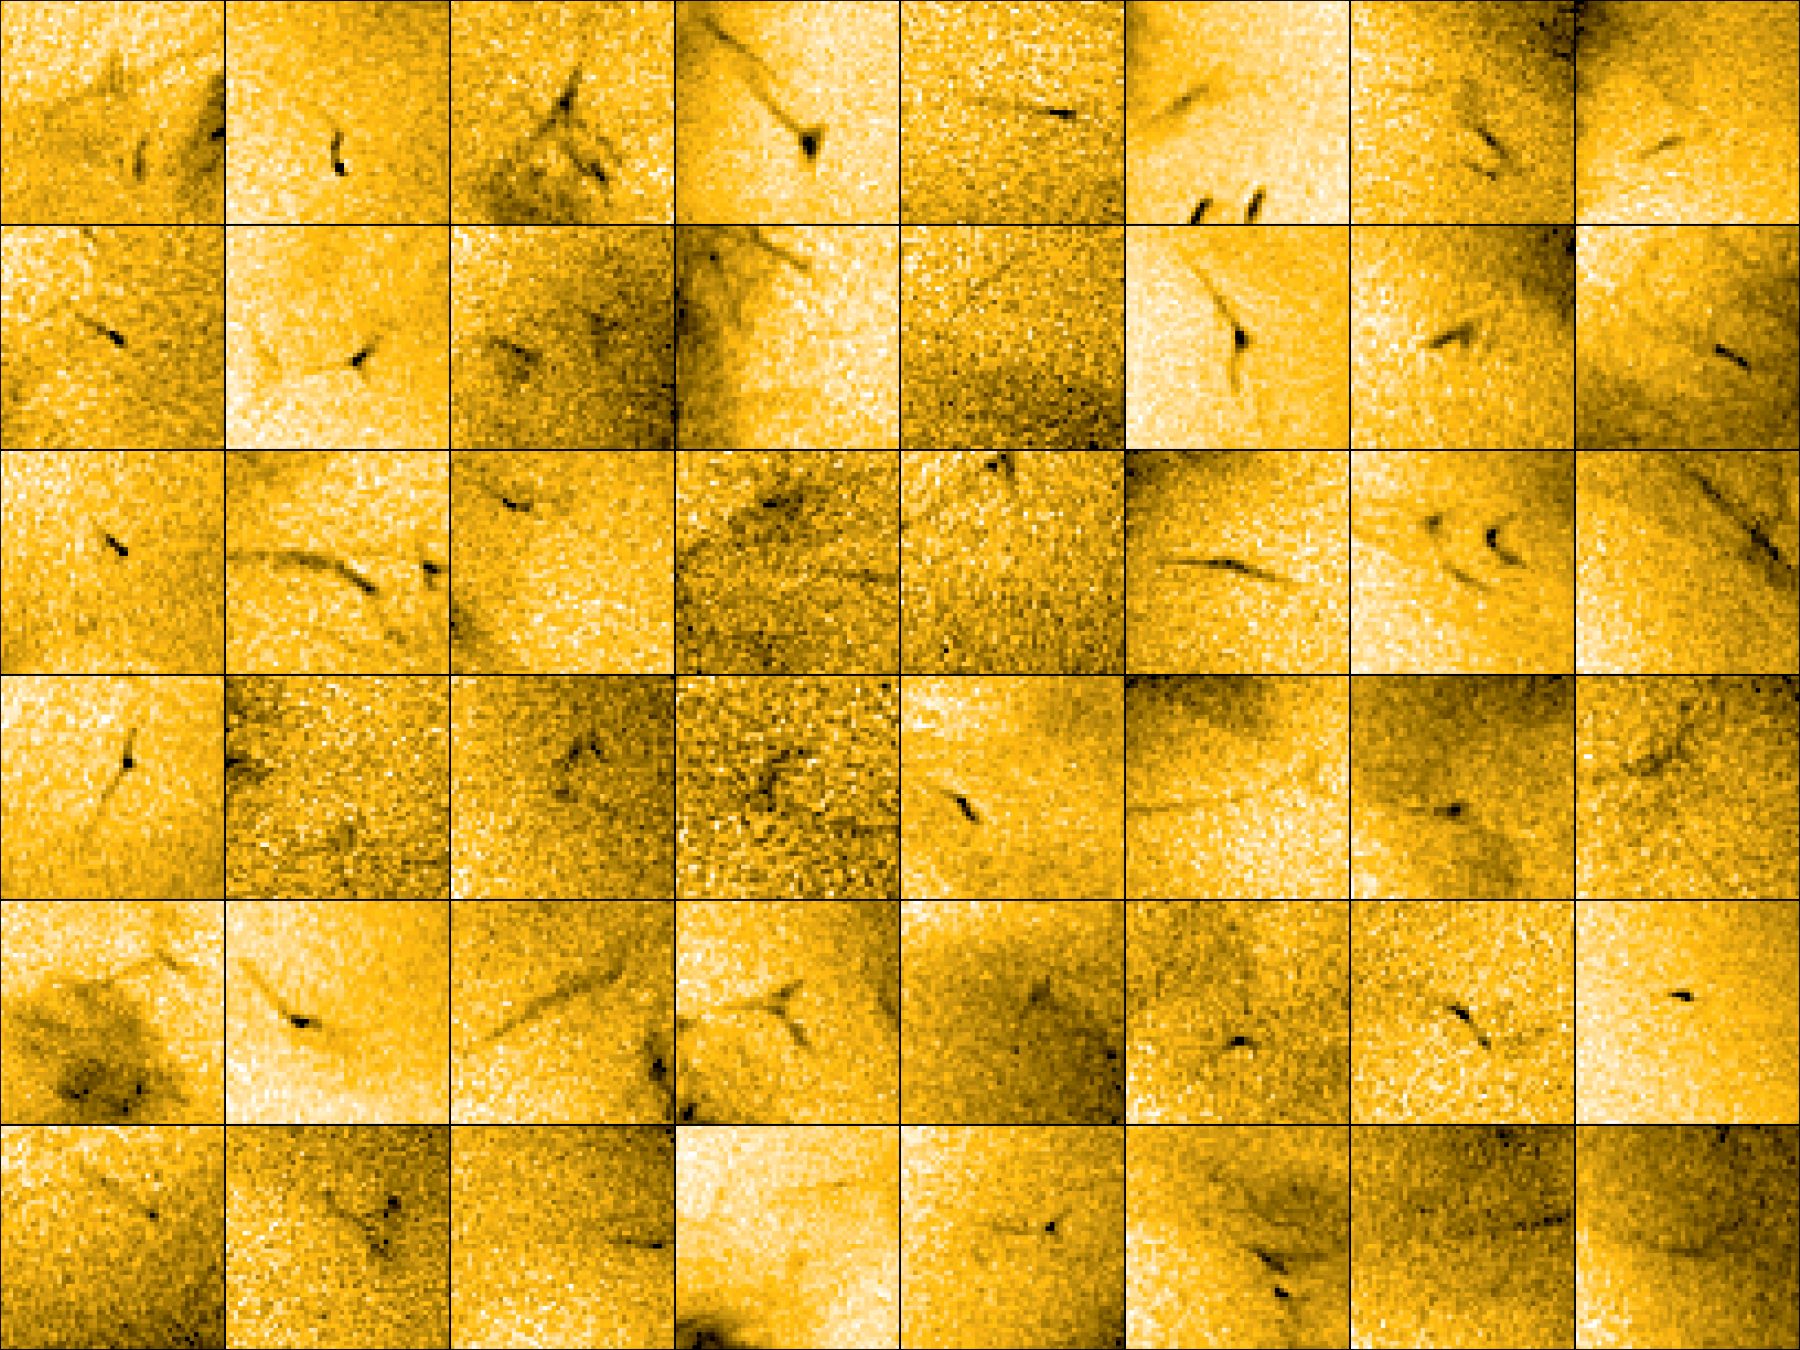 images each showing one or more dark streaks in various orientations